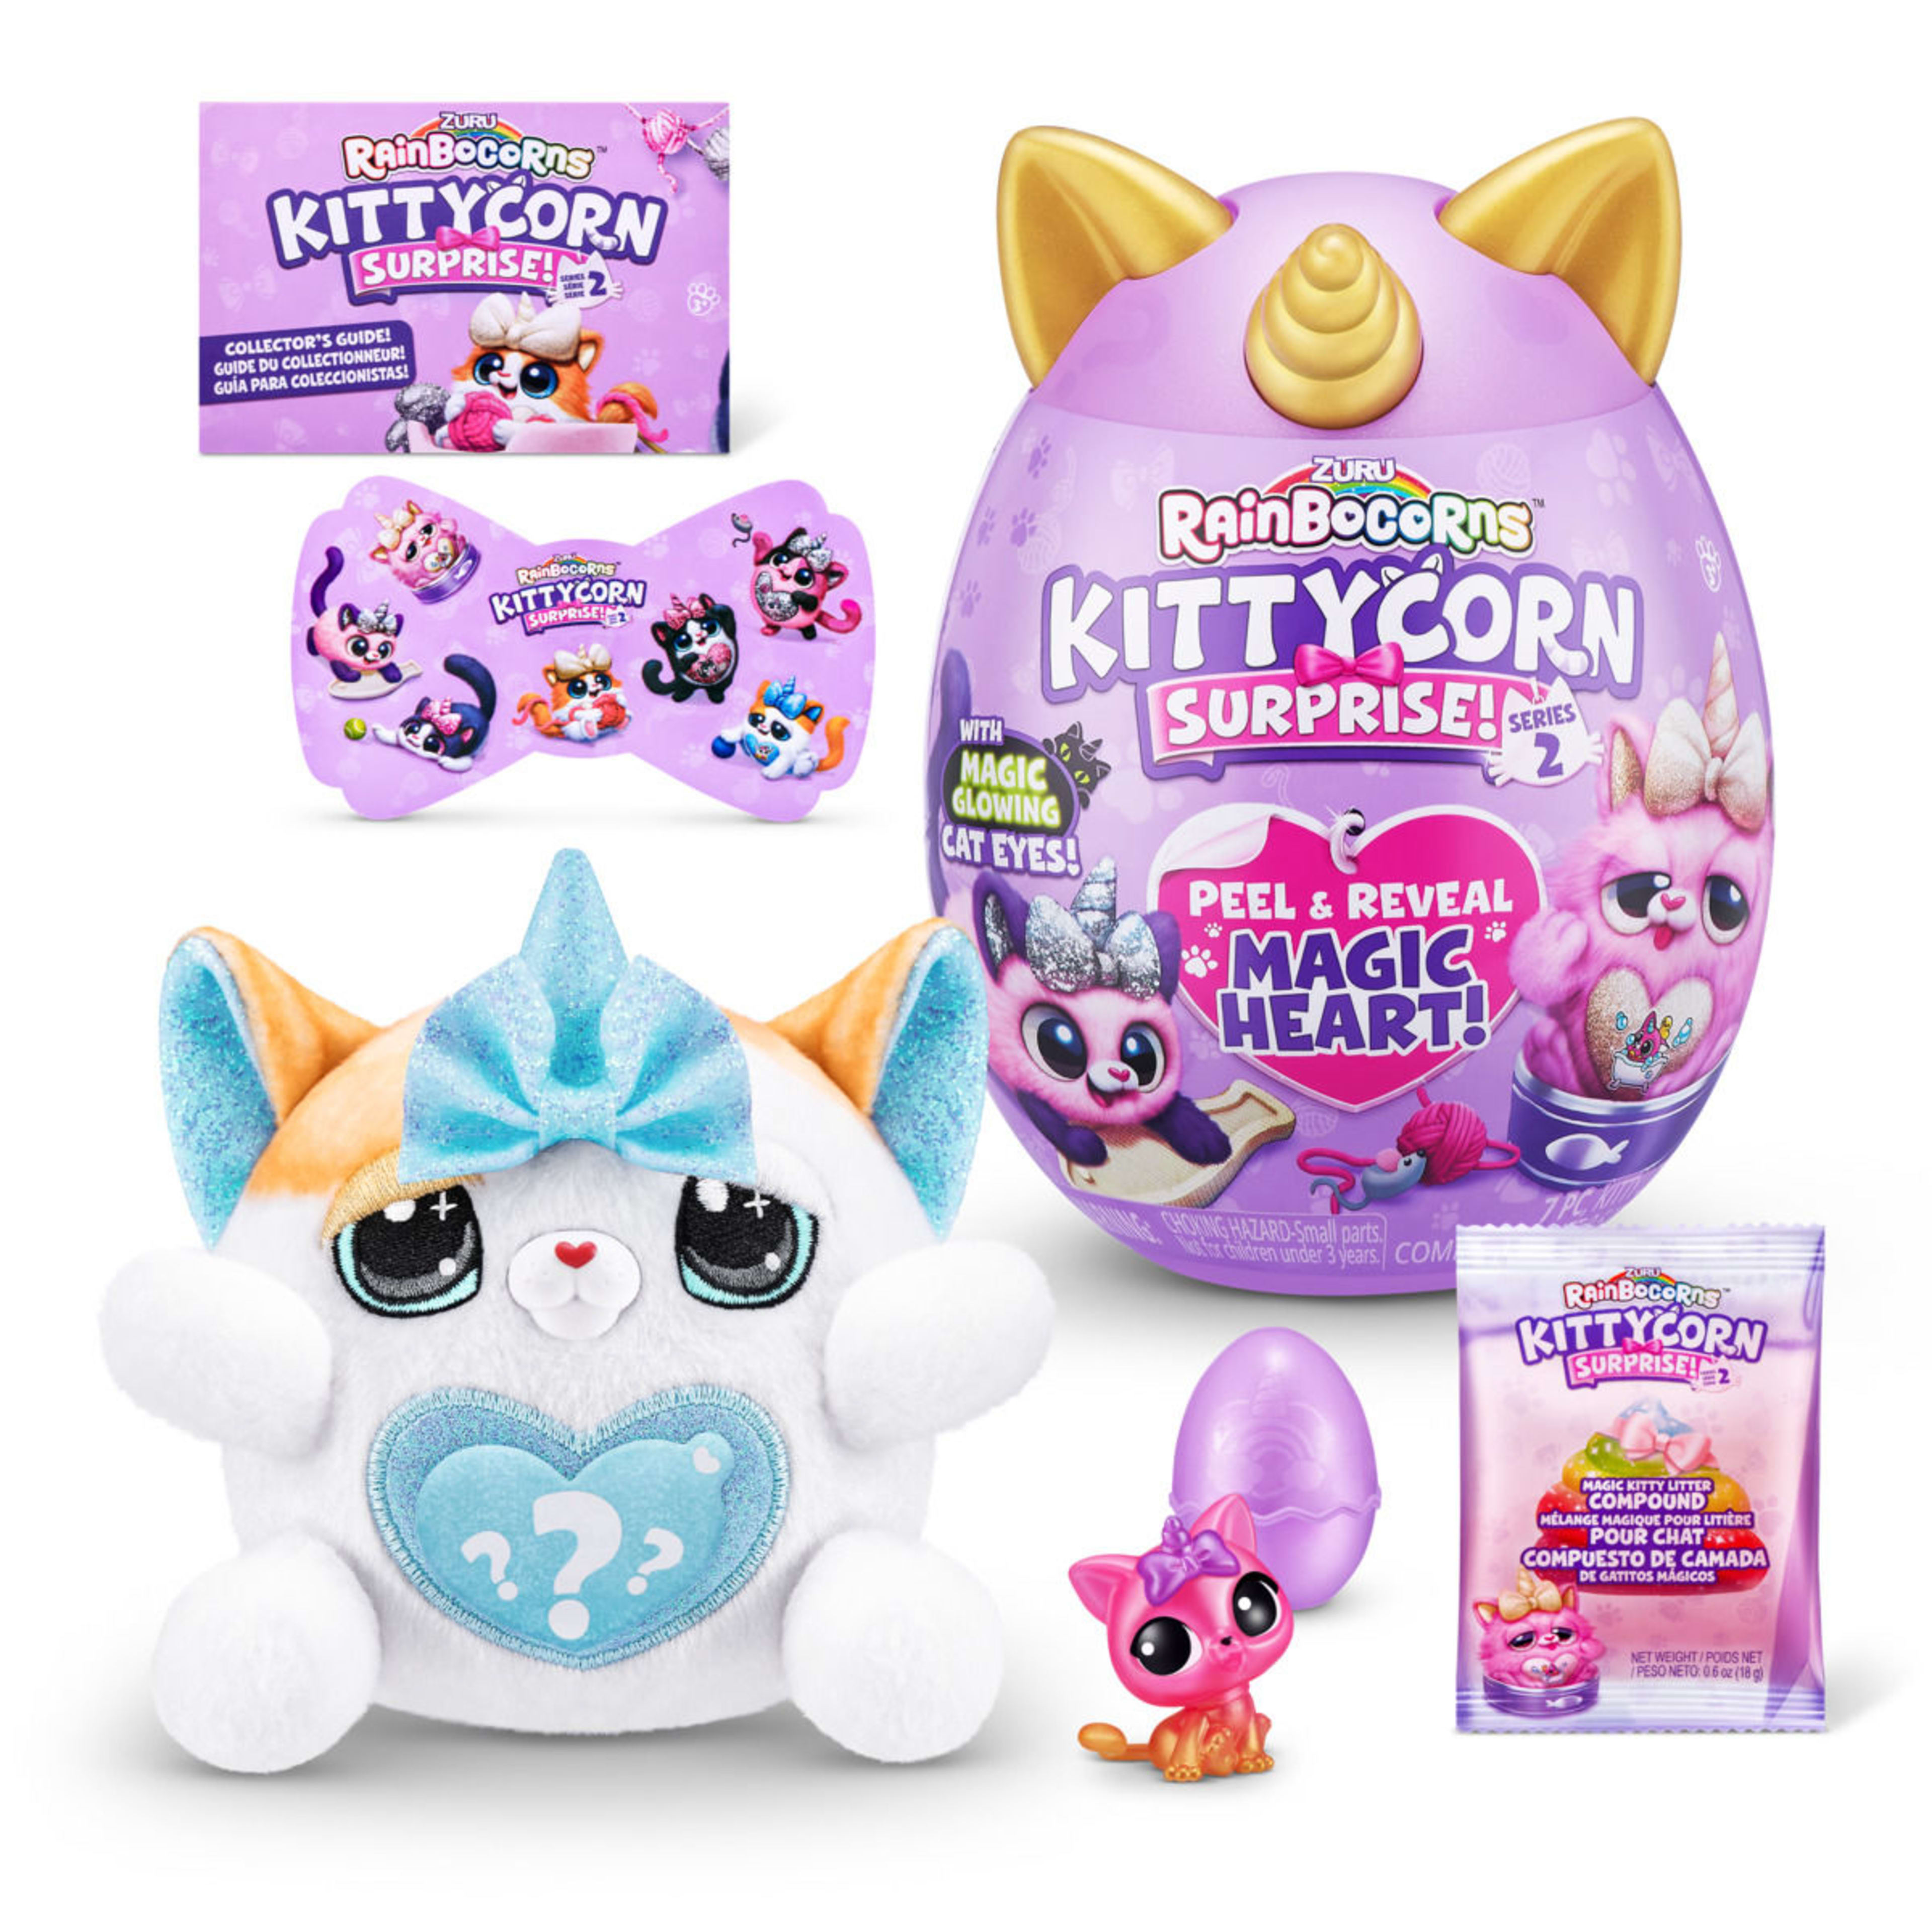 Zuru Rainbocorns Kittycorn Surprise! Series 2 Toy - Assorted - Kmart